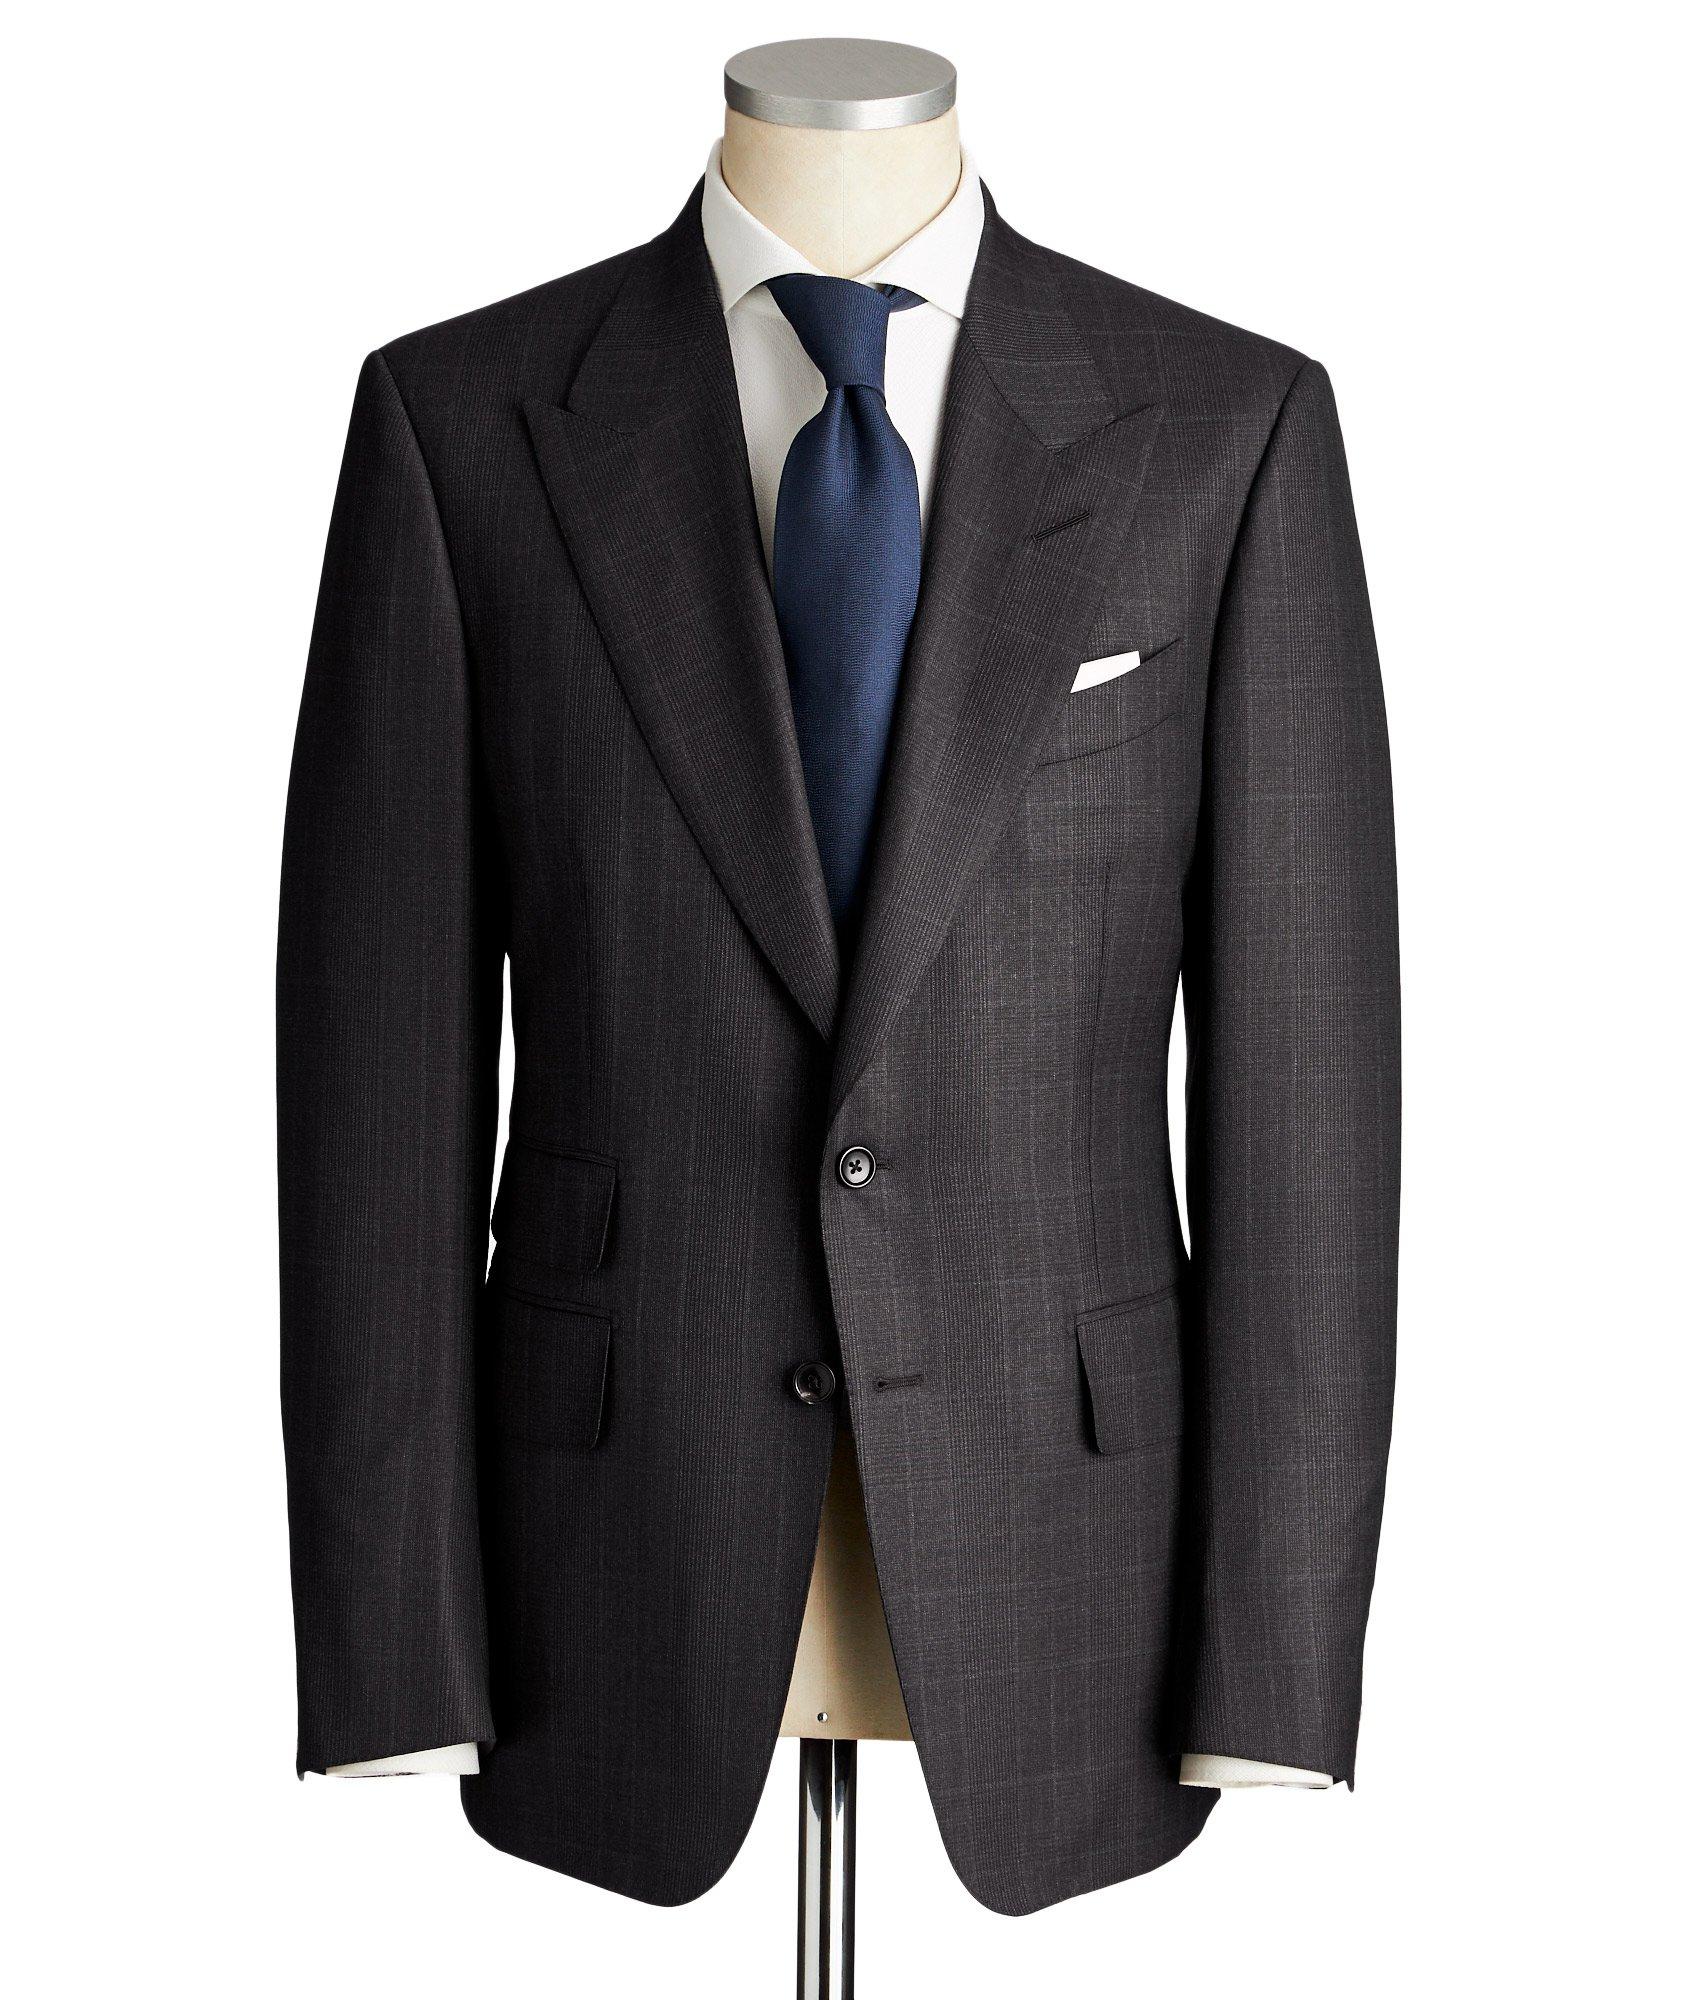 Shelton Glen Checked Suit image 0